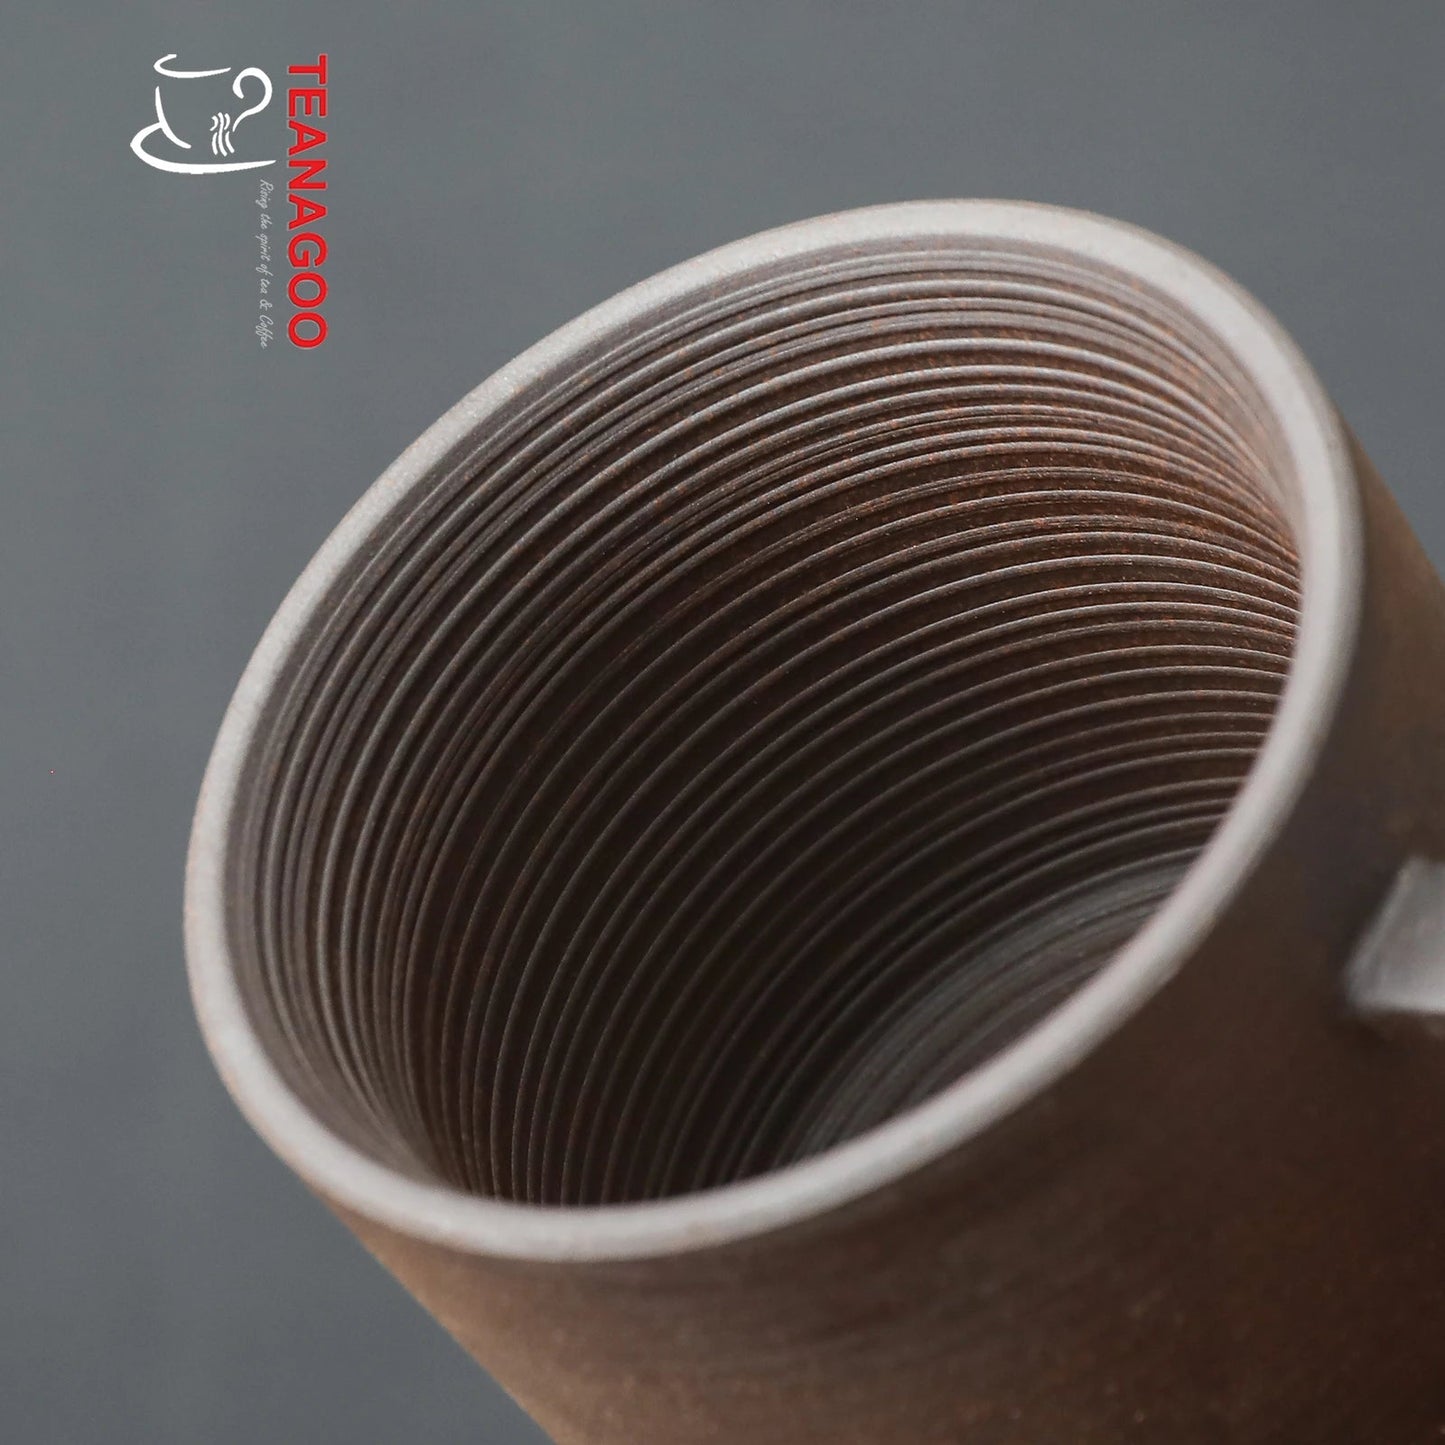 Pottery Clay Tea Cup Handcrafted Ceramic Coffee Mug 150ml